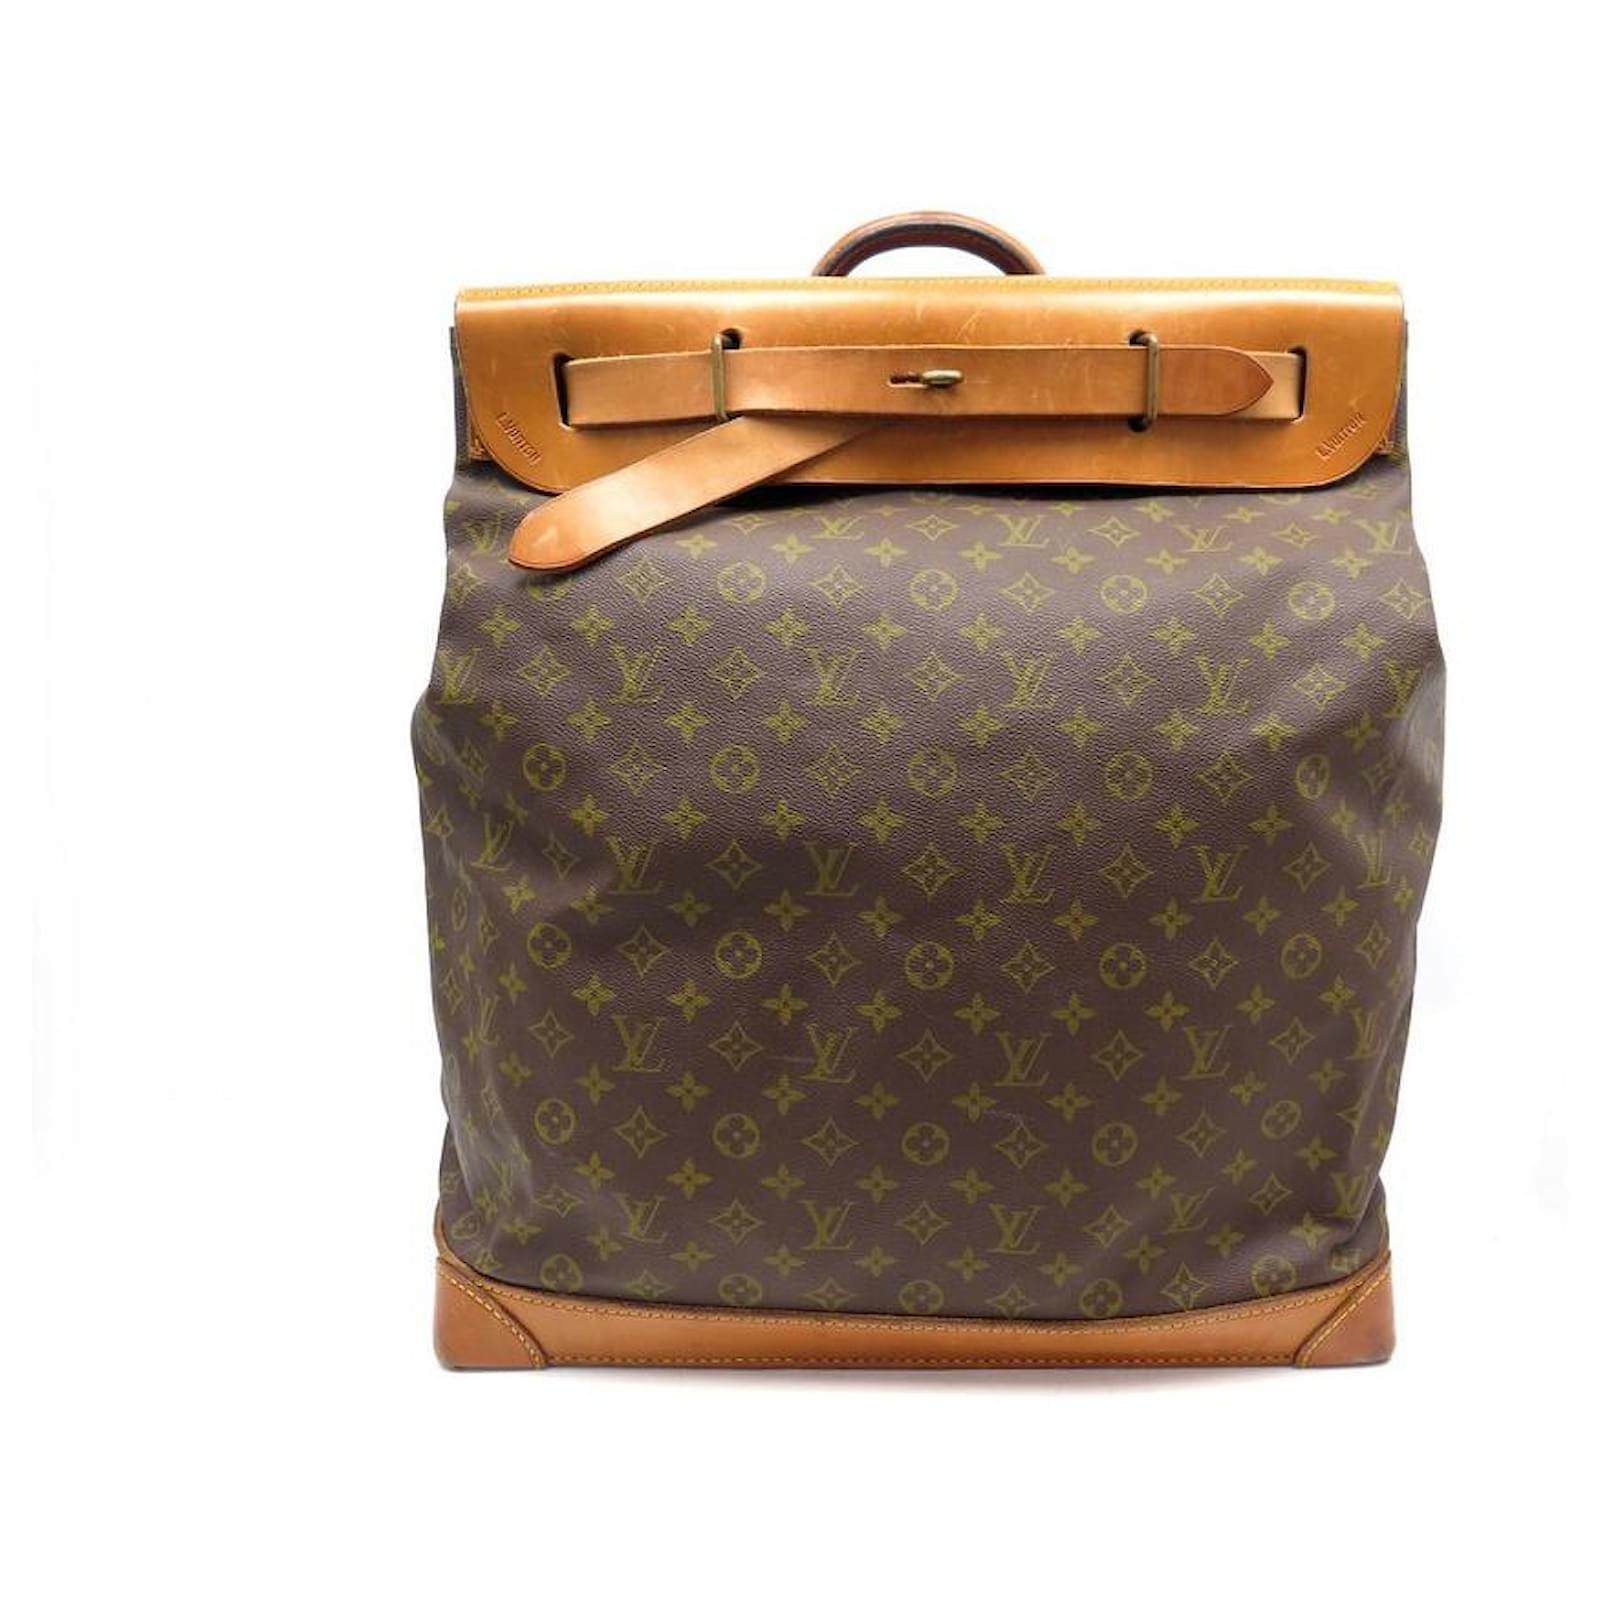 Steamer Bag 45 Monogram - Louis Vuitton